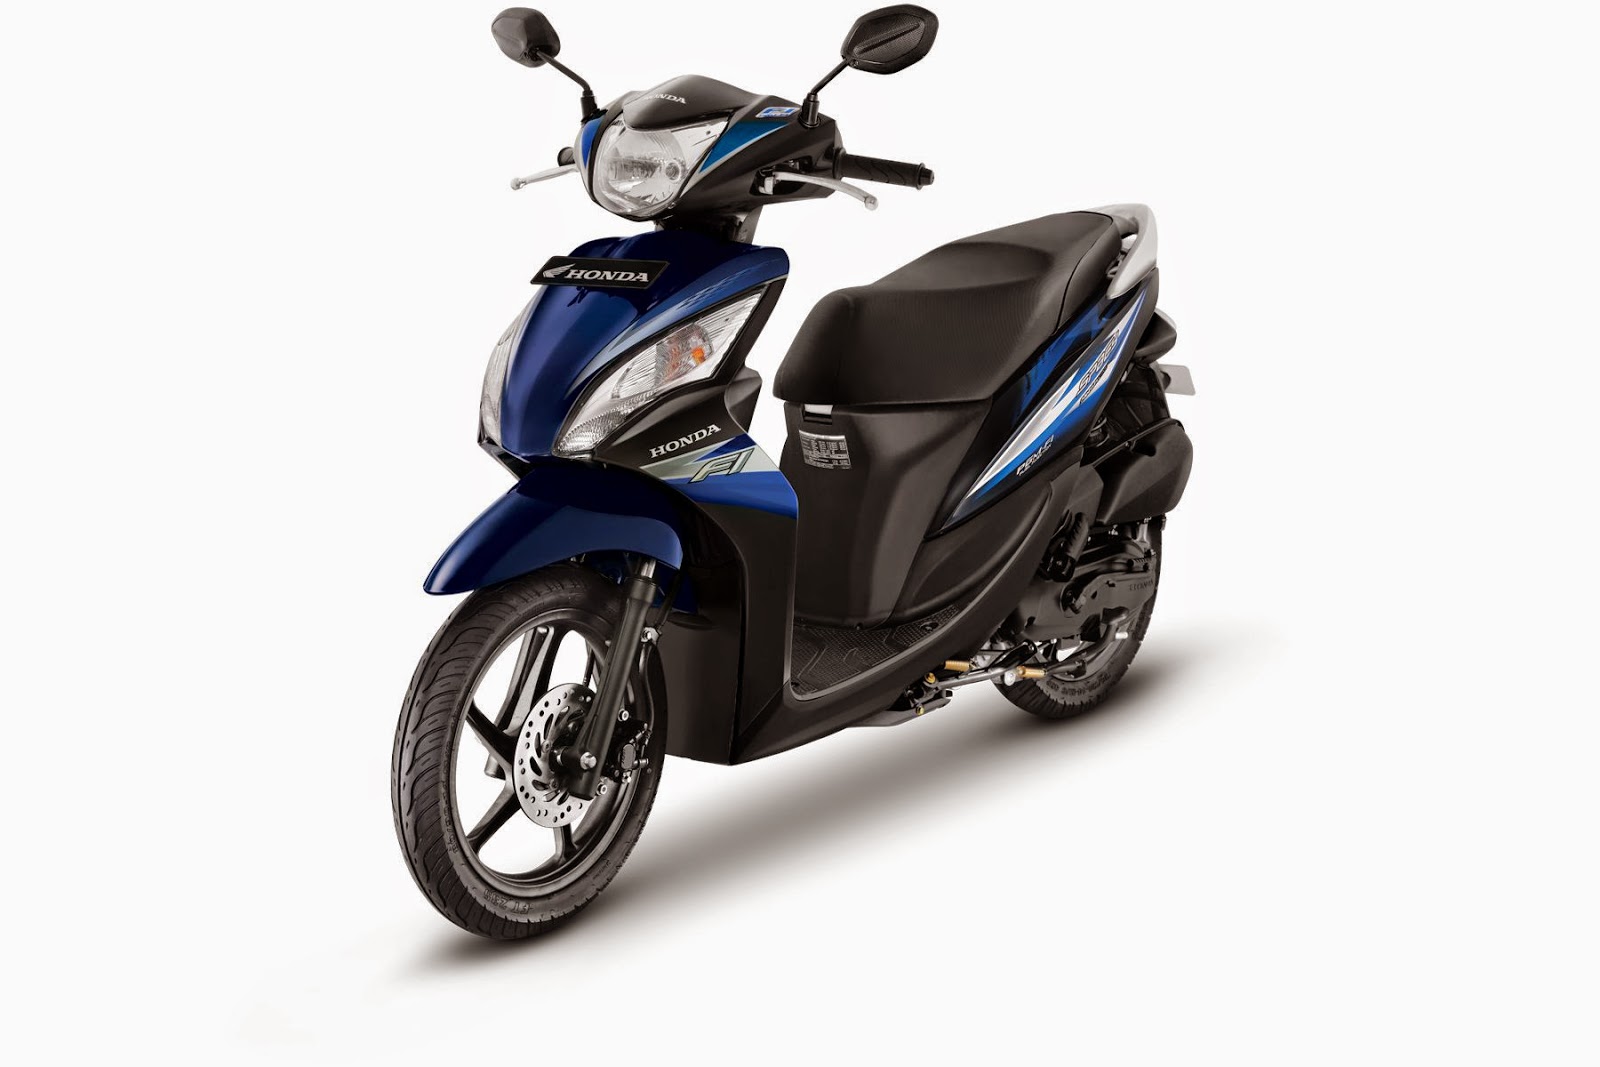 Harga Dan Spesifikasi Honda Spacy Helm In FI Terbaru 2017 Ridergalau